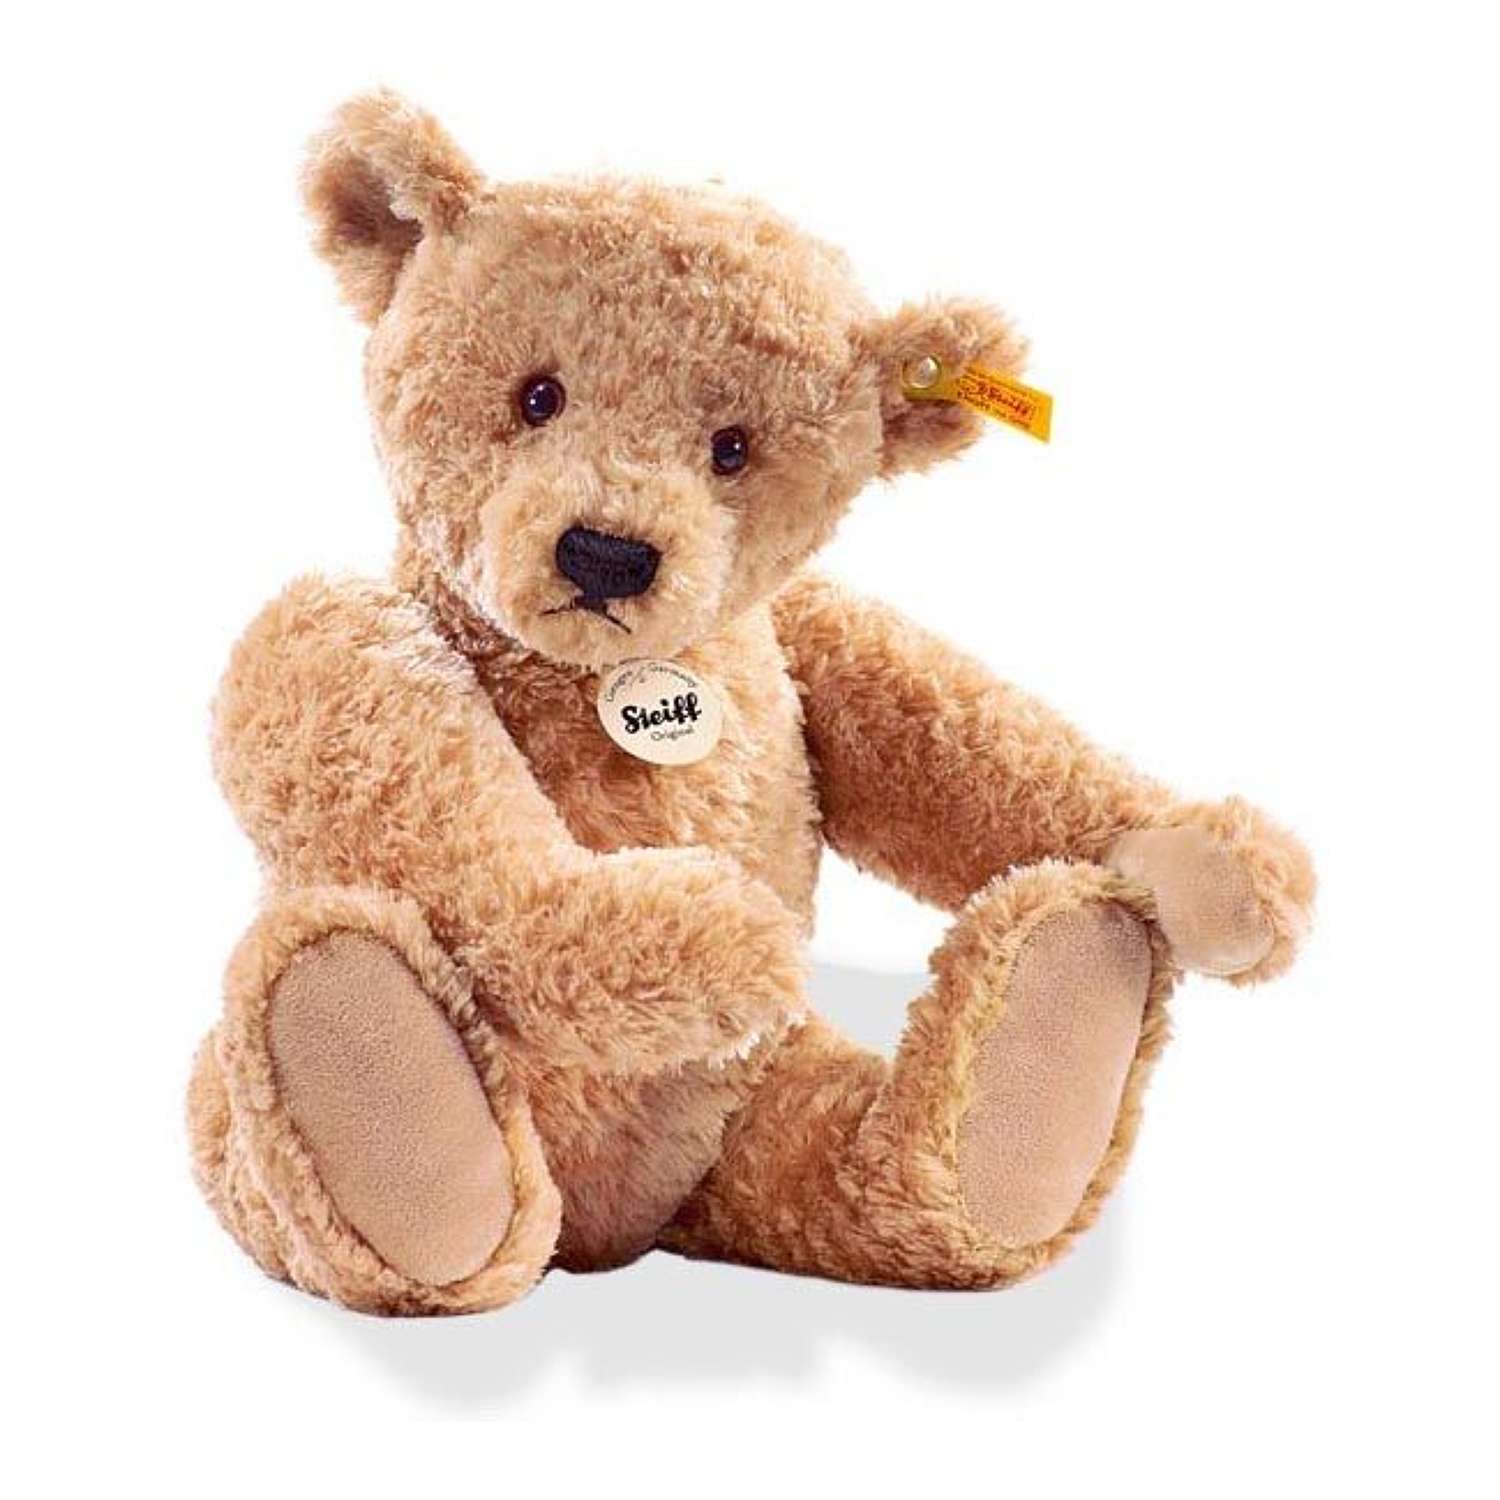 Steiff -  Elmar bear - golden brown, suitable for all ages